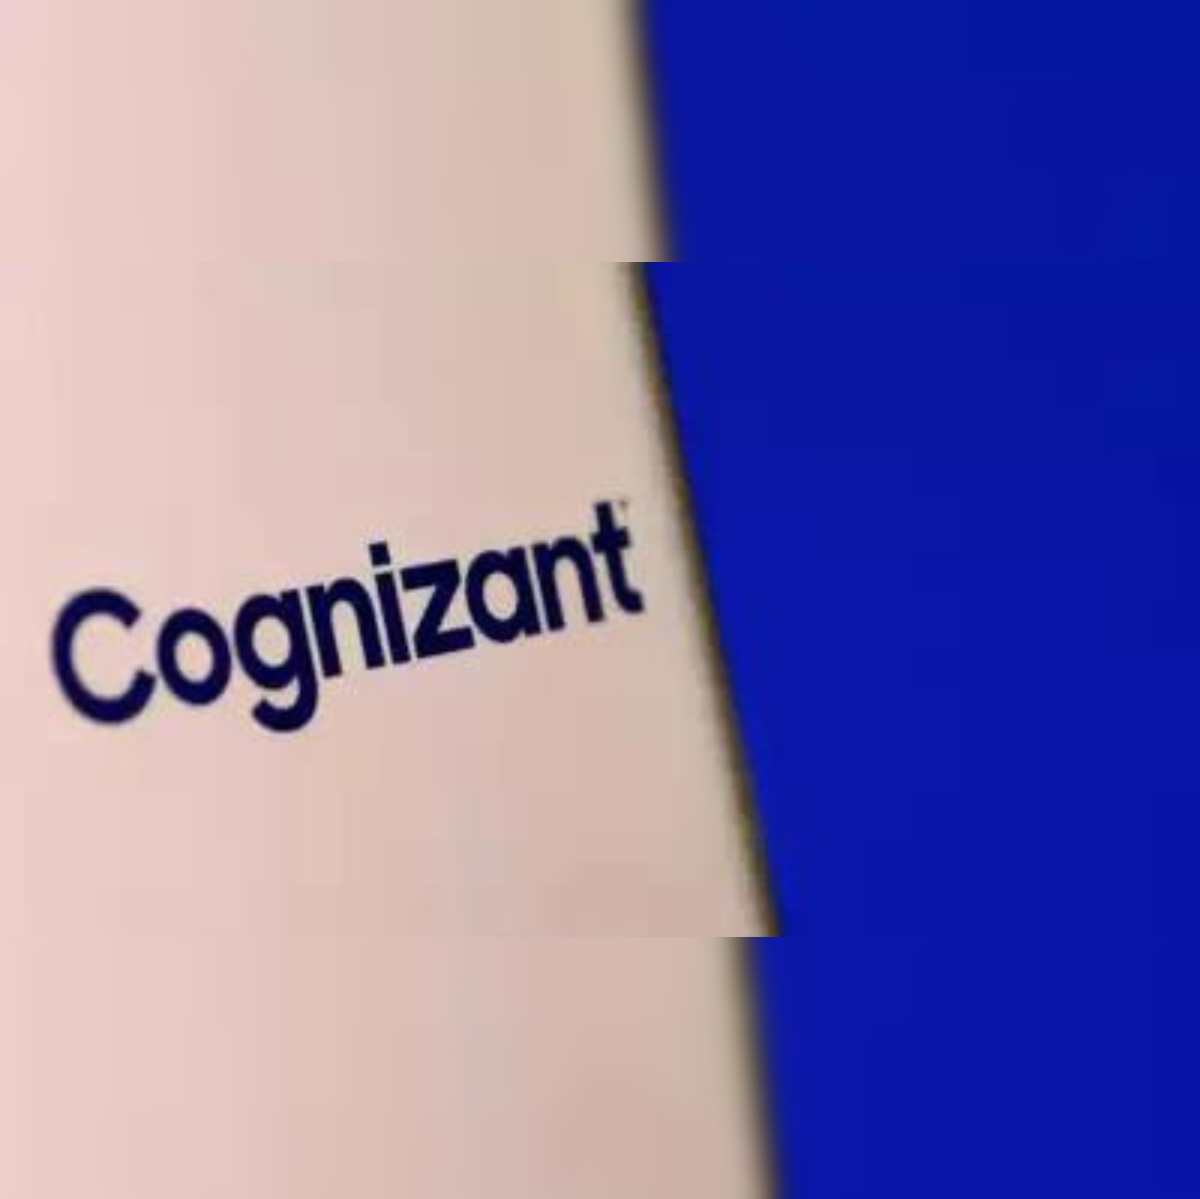 Cognizant's Culture and Values | Cognizant